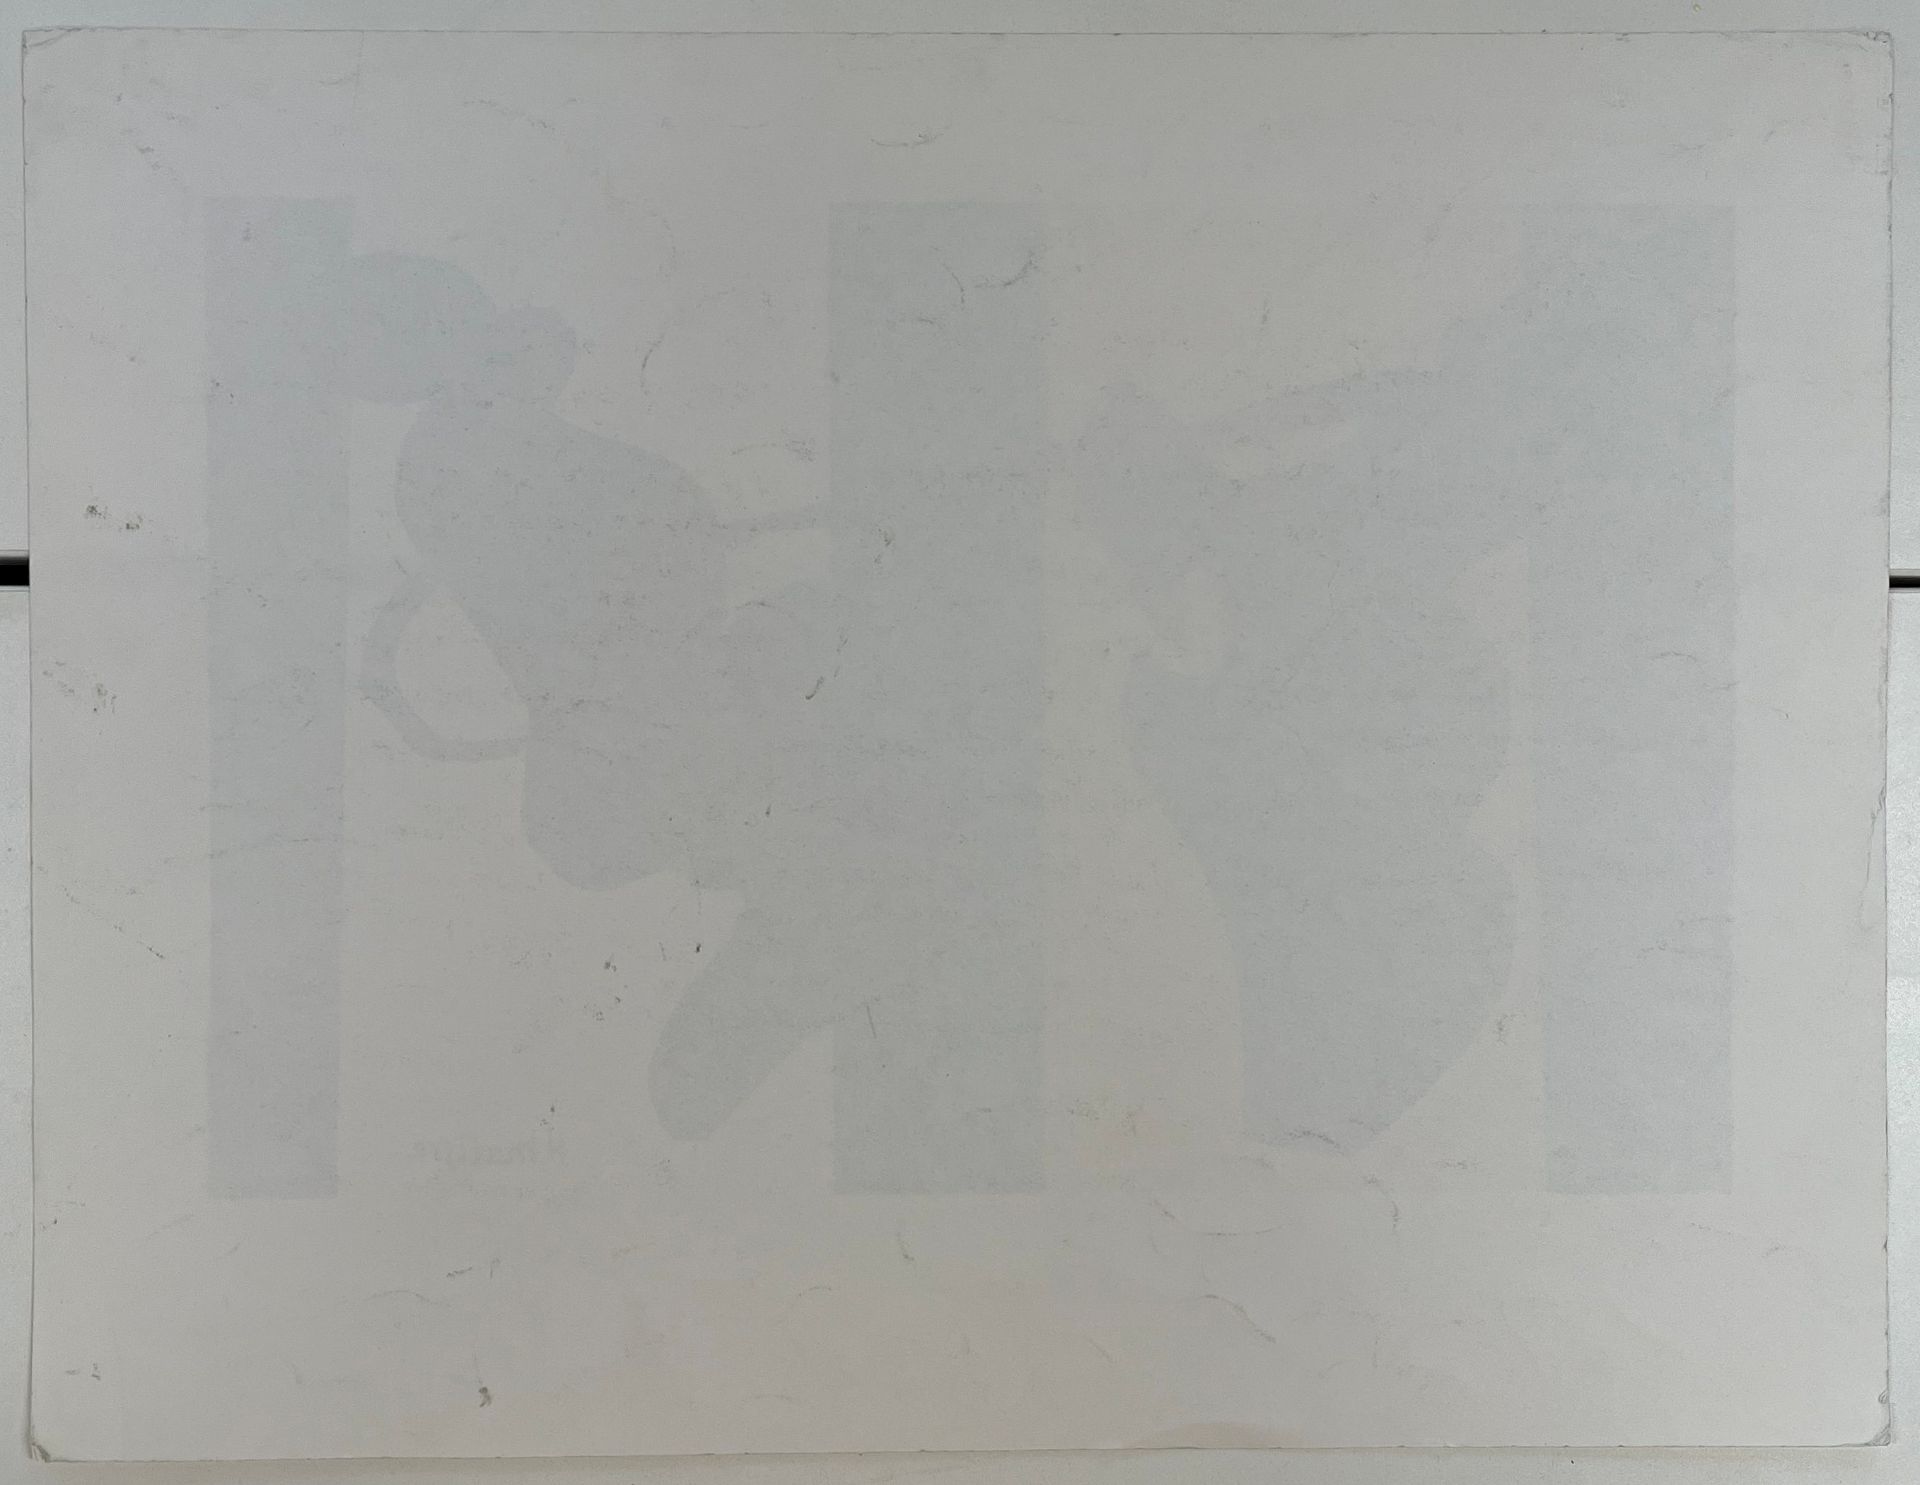 SIX VINTAGE LITHOGRAPHS ON PAPER AFTER HENRI MATISSE - Image 9 of 19